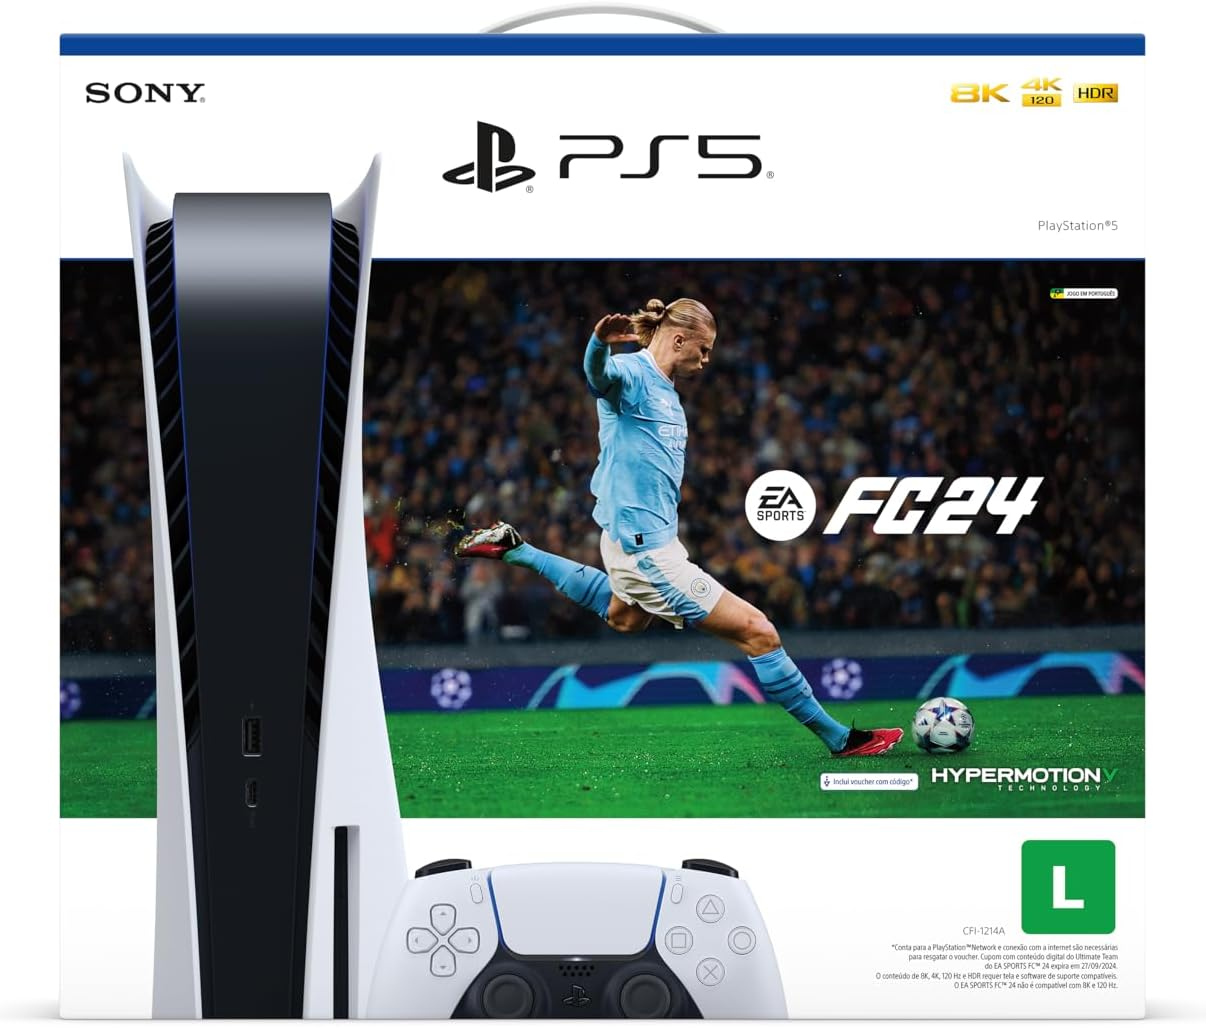  Sony PlayStation 5 EA FC 24 Bundle [BR]